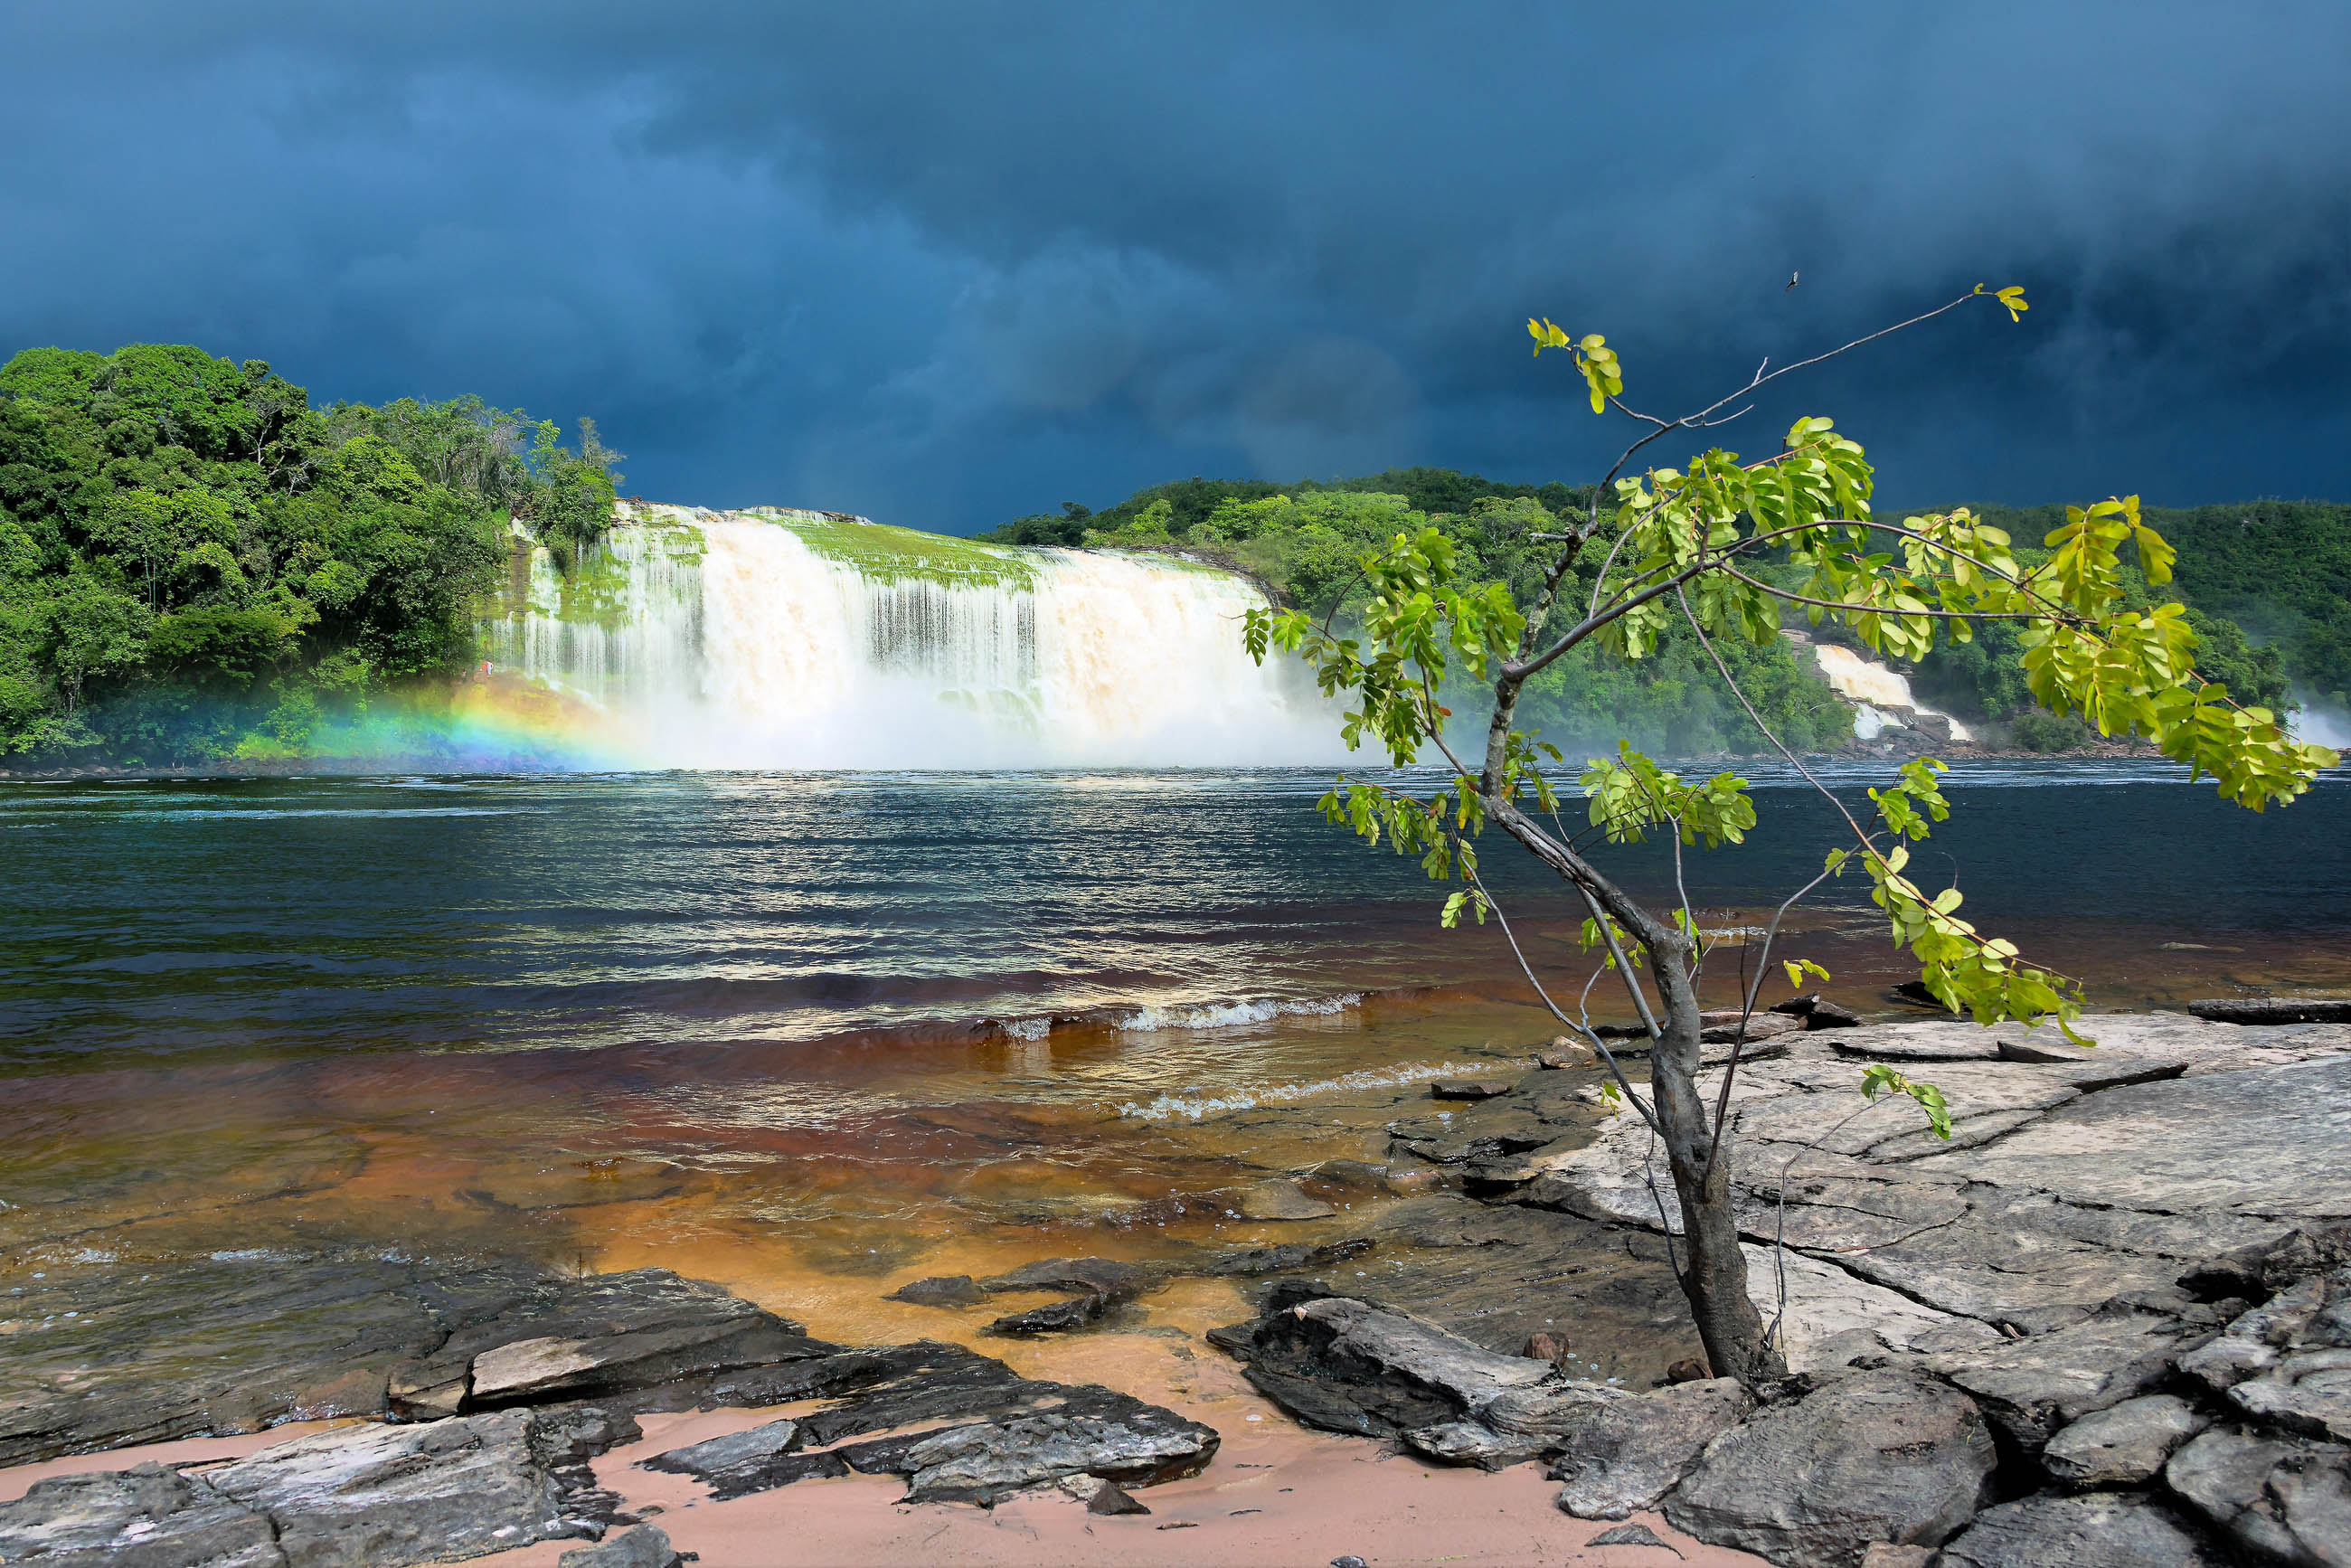 Реки и озера венесуэлы. Водопад Канайма Венесуэла. Лагуна Канайма в Венесуэле. Национальный парк Канайма. Нац парк Канайма Анхель.